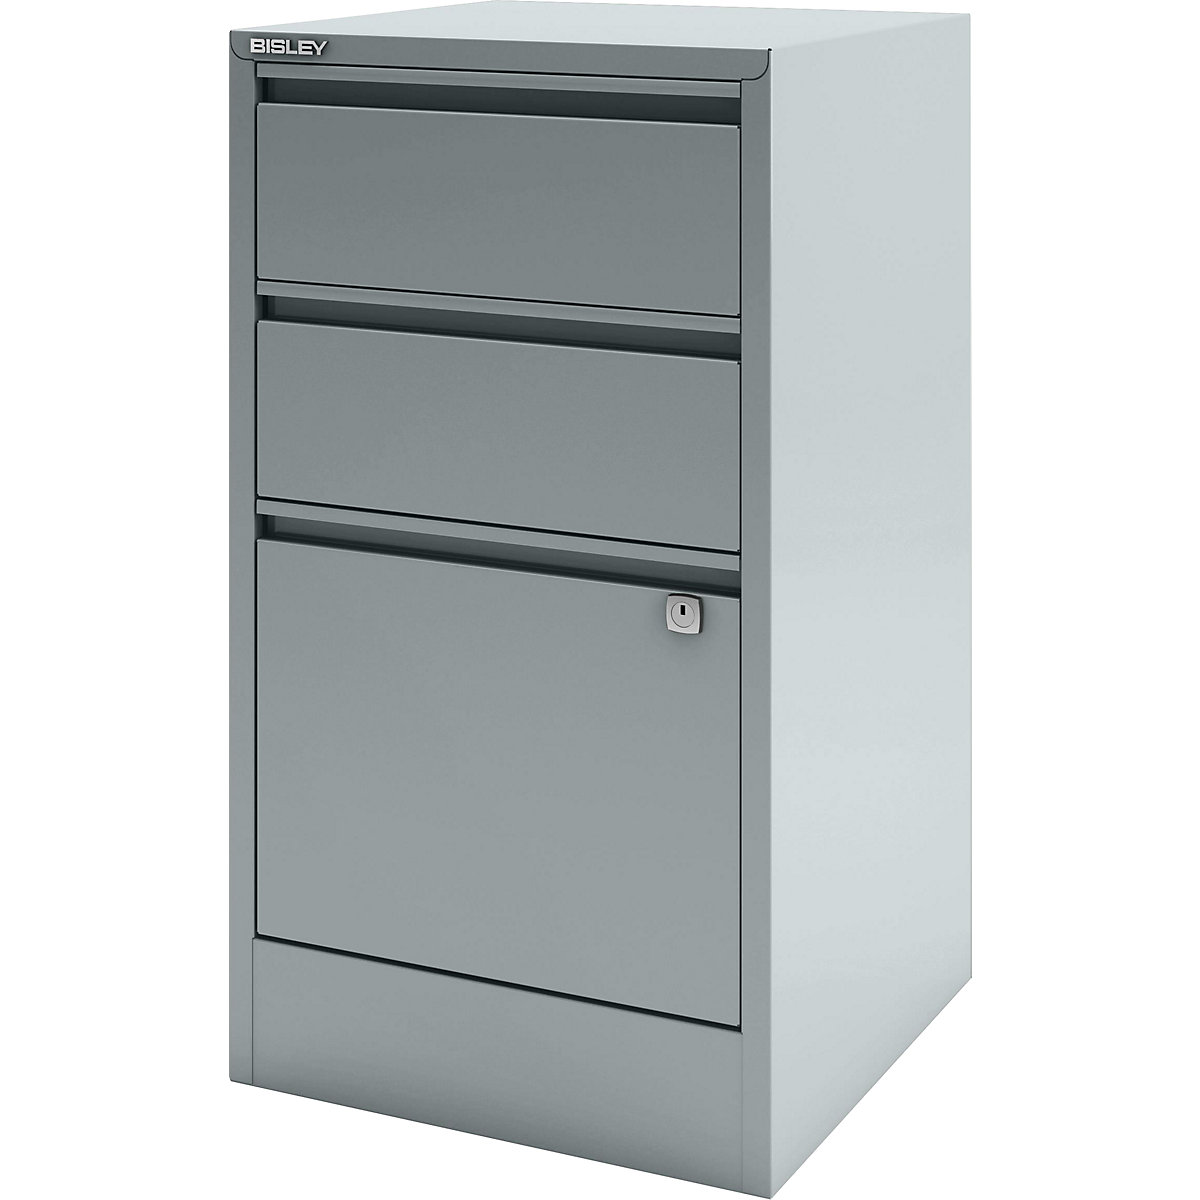 HomeFiler suspension filing cabinet – BISLEY, 2 drawers, 1 suspension file drawer, silver-4